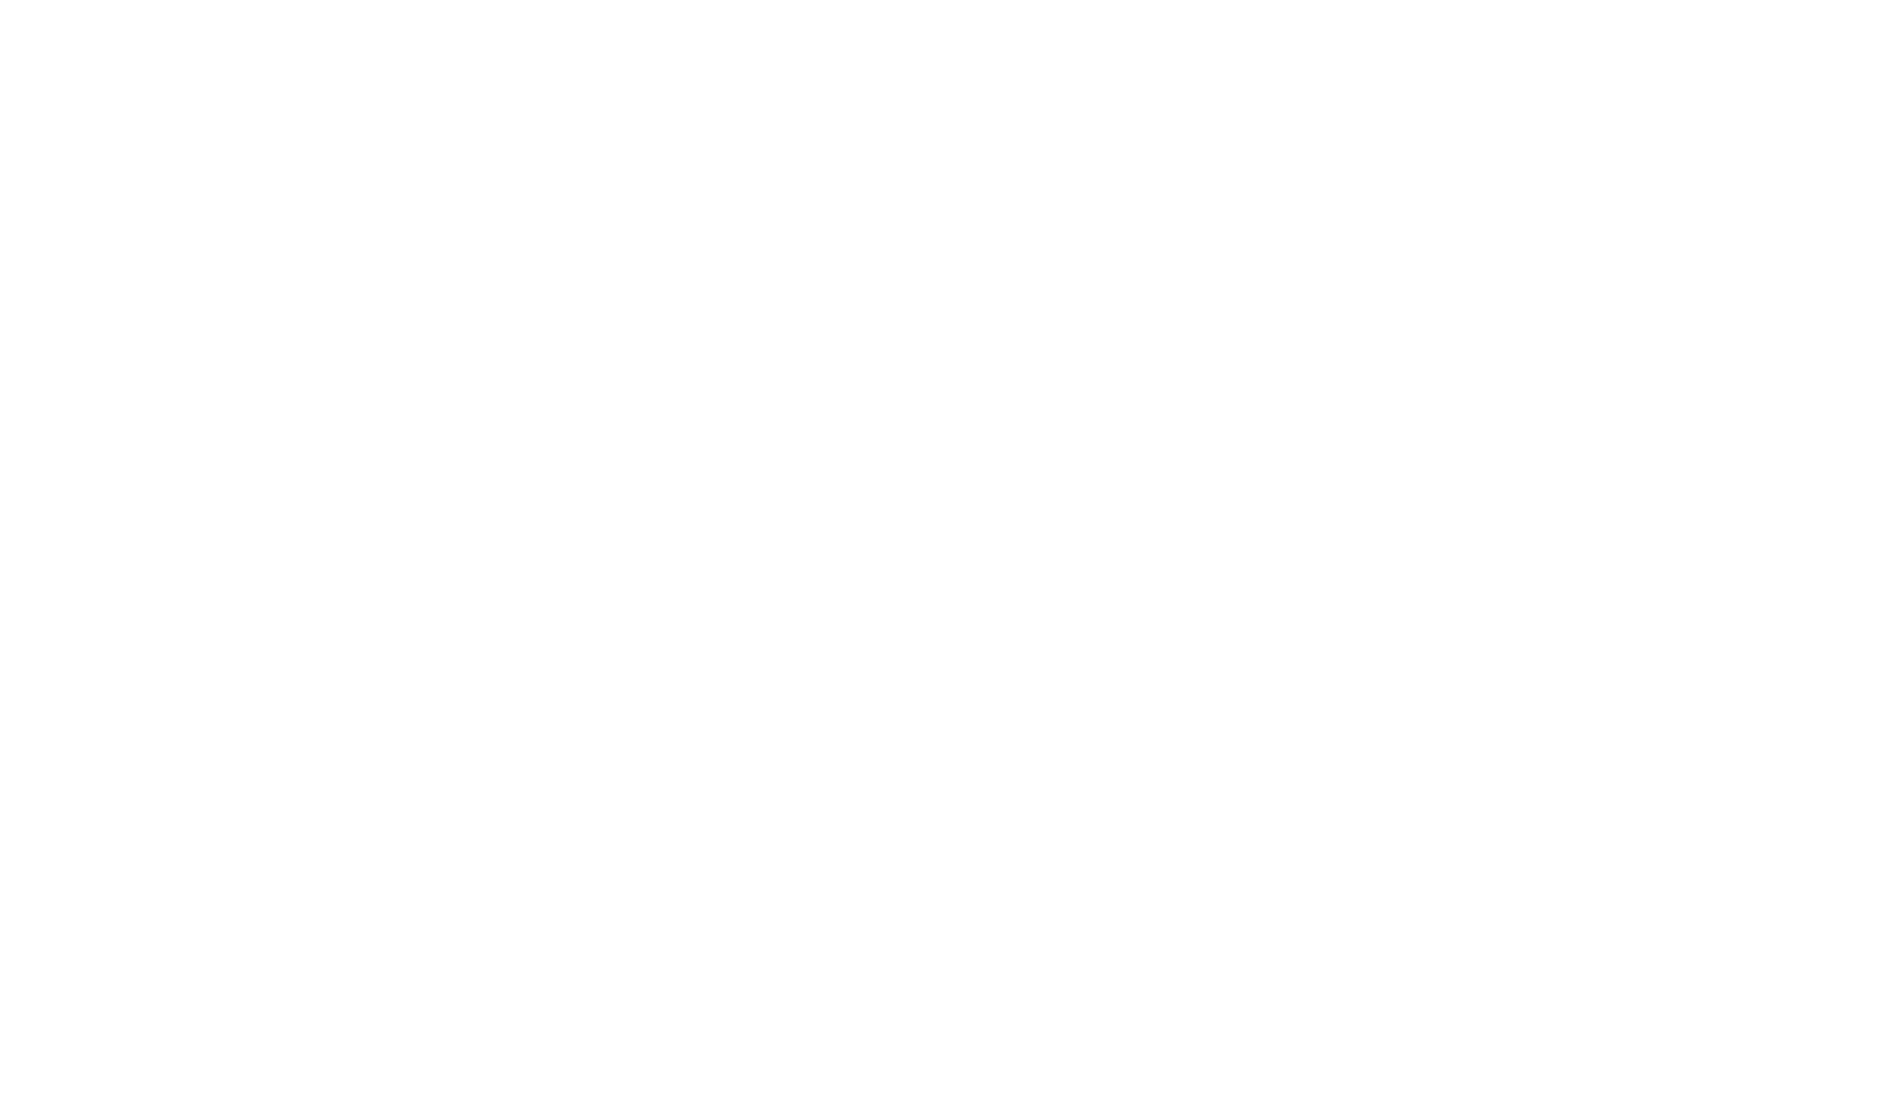 Les fabricants - logo client Pernod Ricard